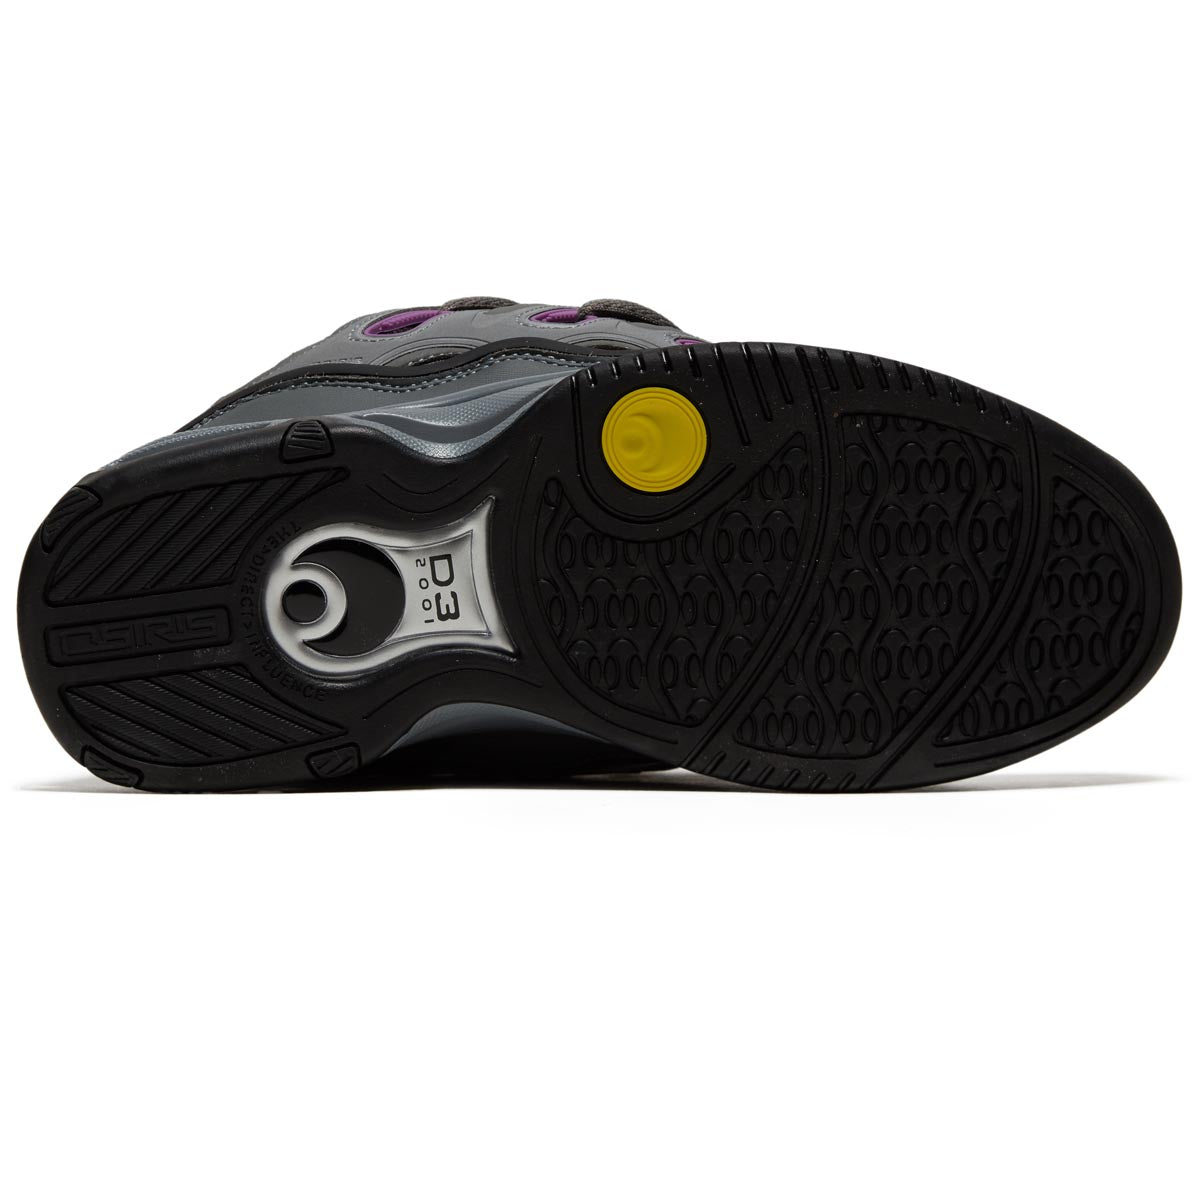 Osiris D3 2001 Shoes - Grey/Purple/Yellow image 4